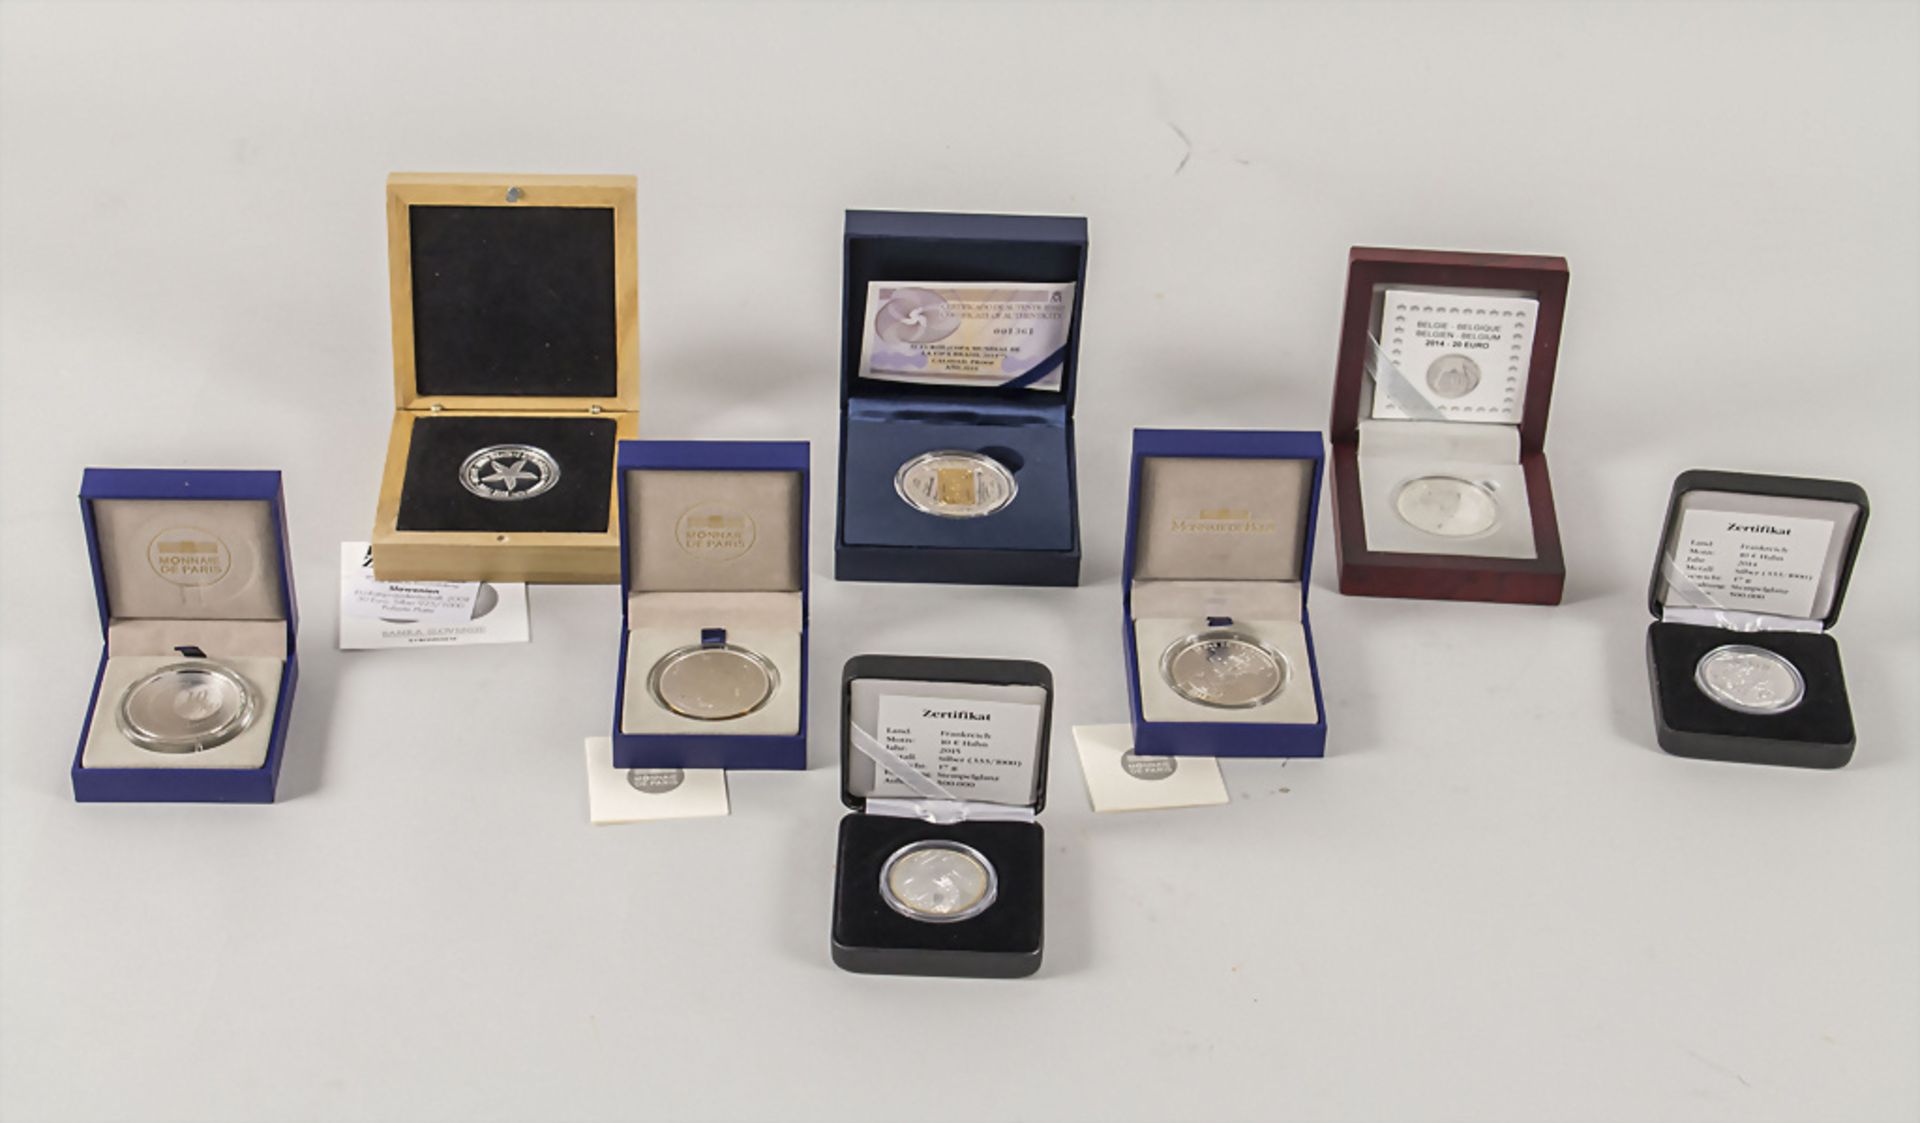 8 Gedenkmünzen / 8 commemorative coins, Frankreich, Belgien, Slowenien